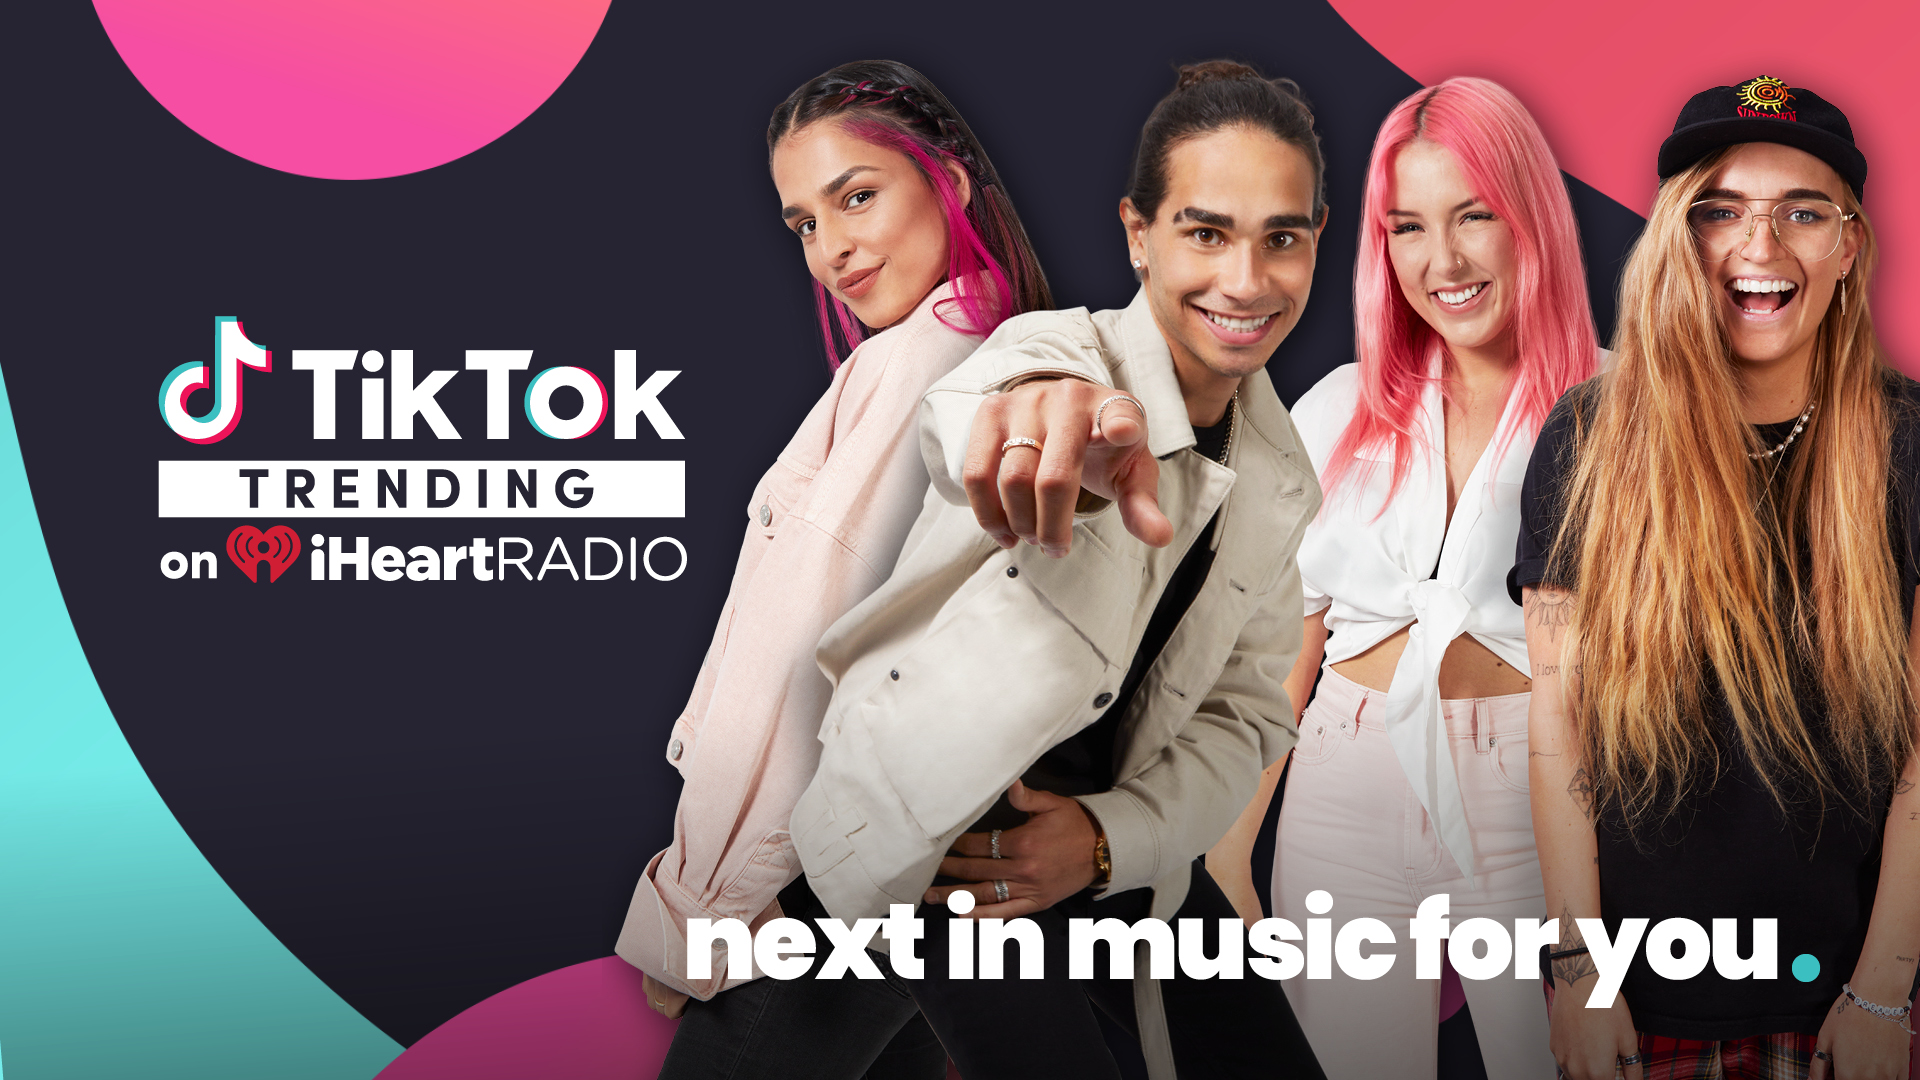 TikTok launches Australian radio station TikTok Trending on iHeartRadio